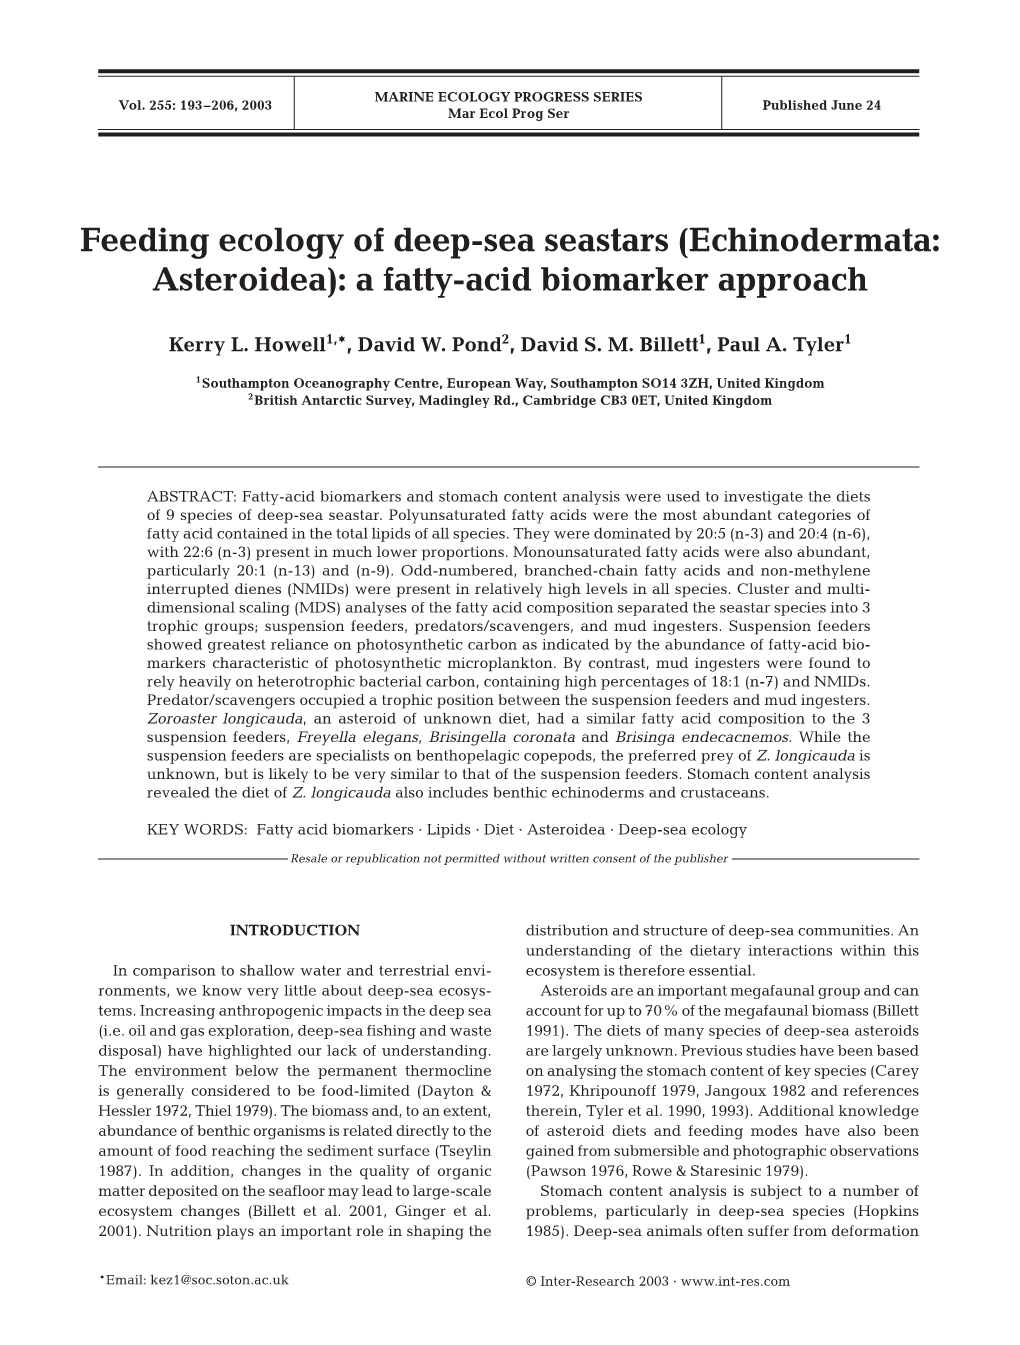 Feeding Ecology of Deep-Sea Seastars (Echinodermata: Asteroidea): a Fatty-Acid Biomarker Approach